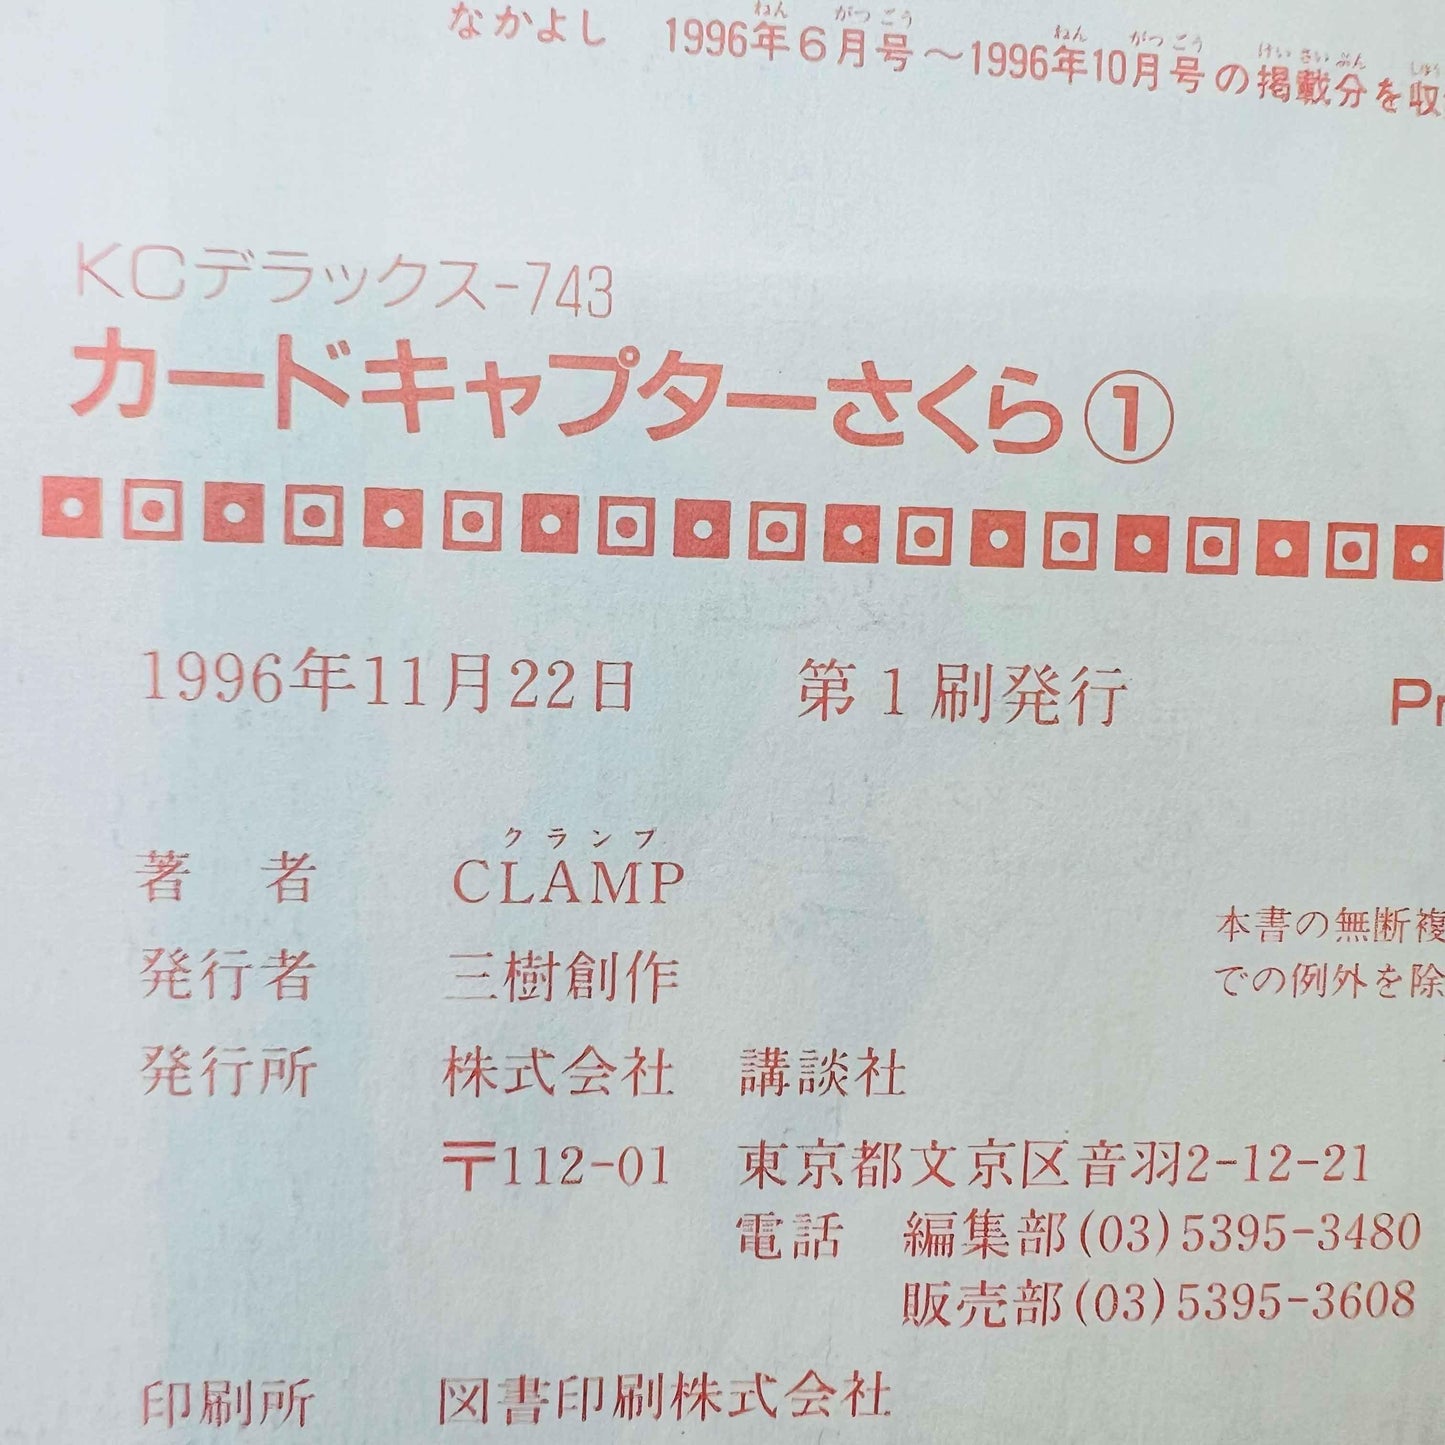 Card Captor Sakura - Volume 01 - 1stPrint.net - 1st First Print Edition Manga Store - M-SAKU-01-003